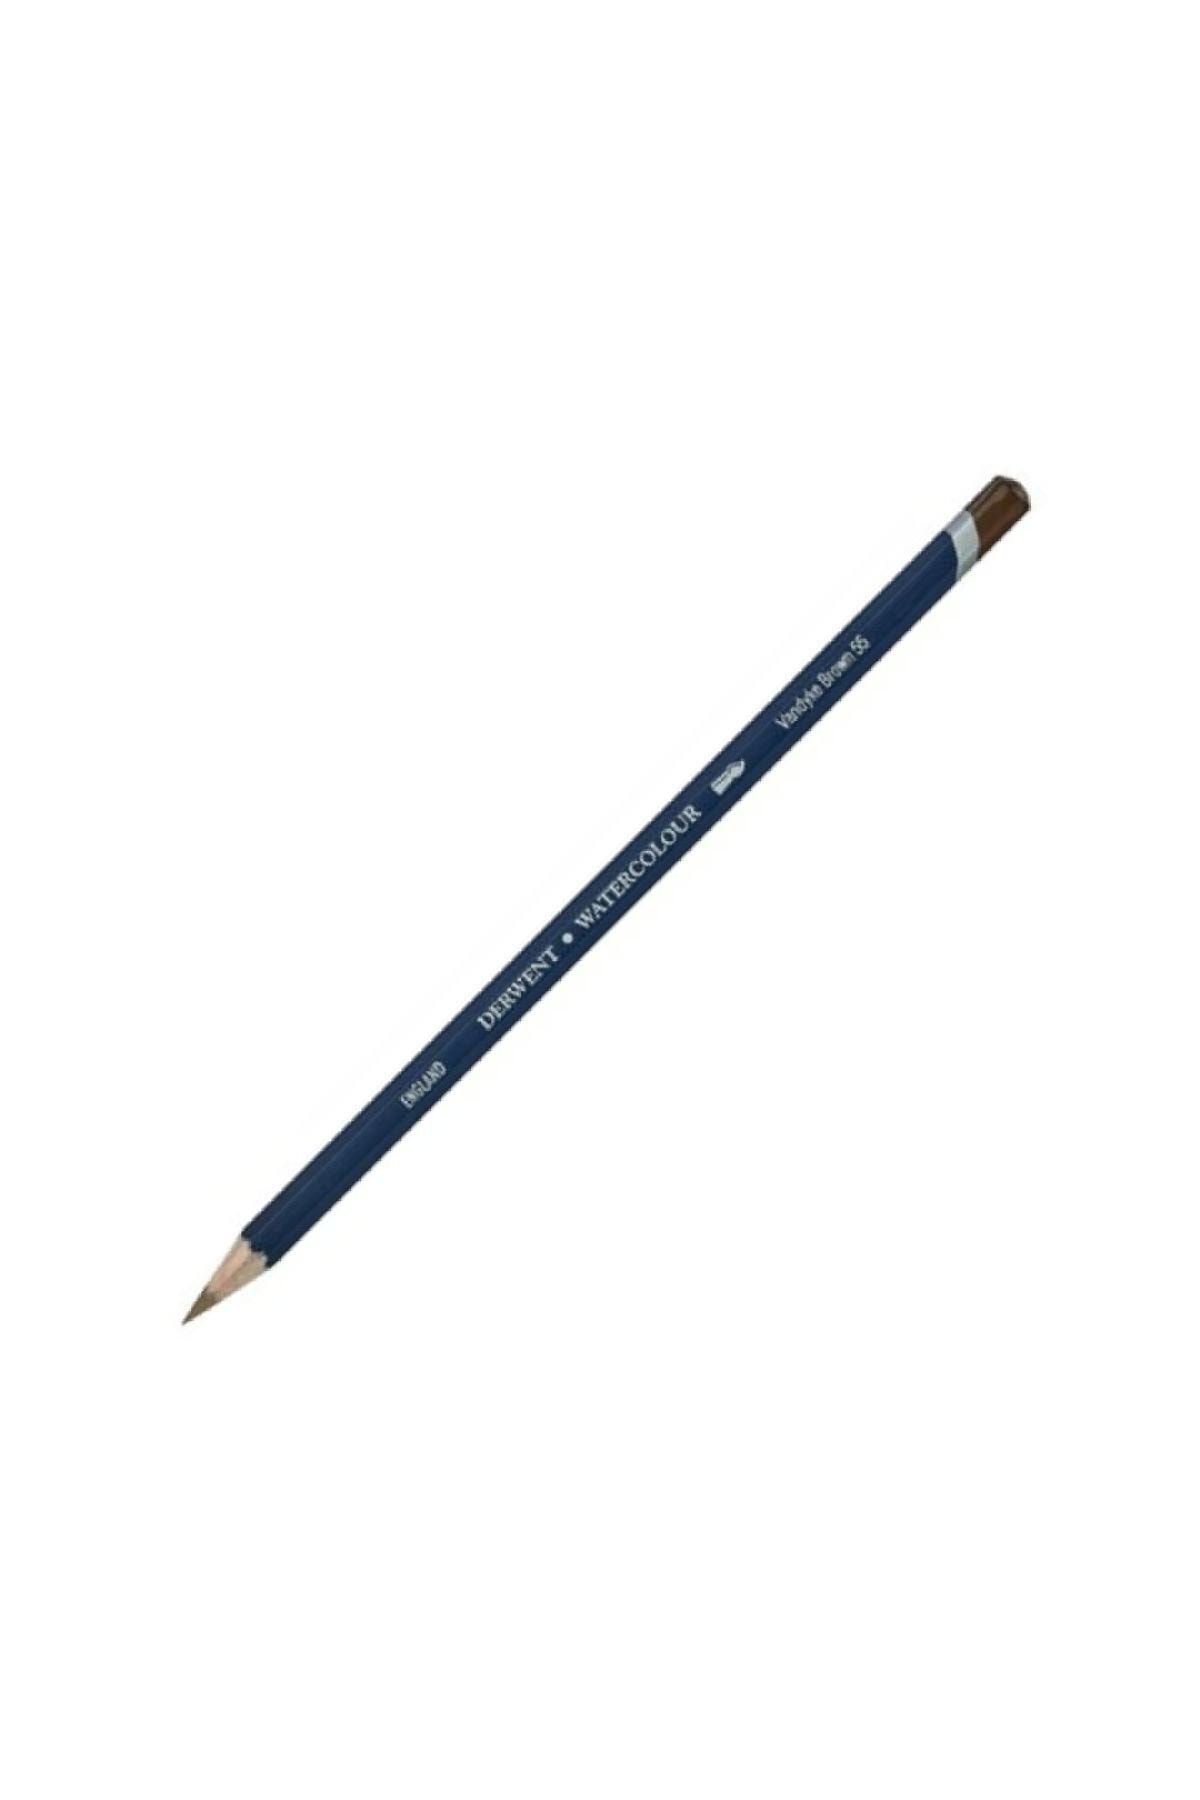 Derwent Watercolour Pencil (sulu Boya Kalemi) Vandyke Brown (55)